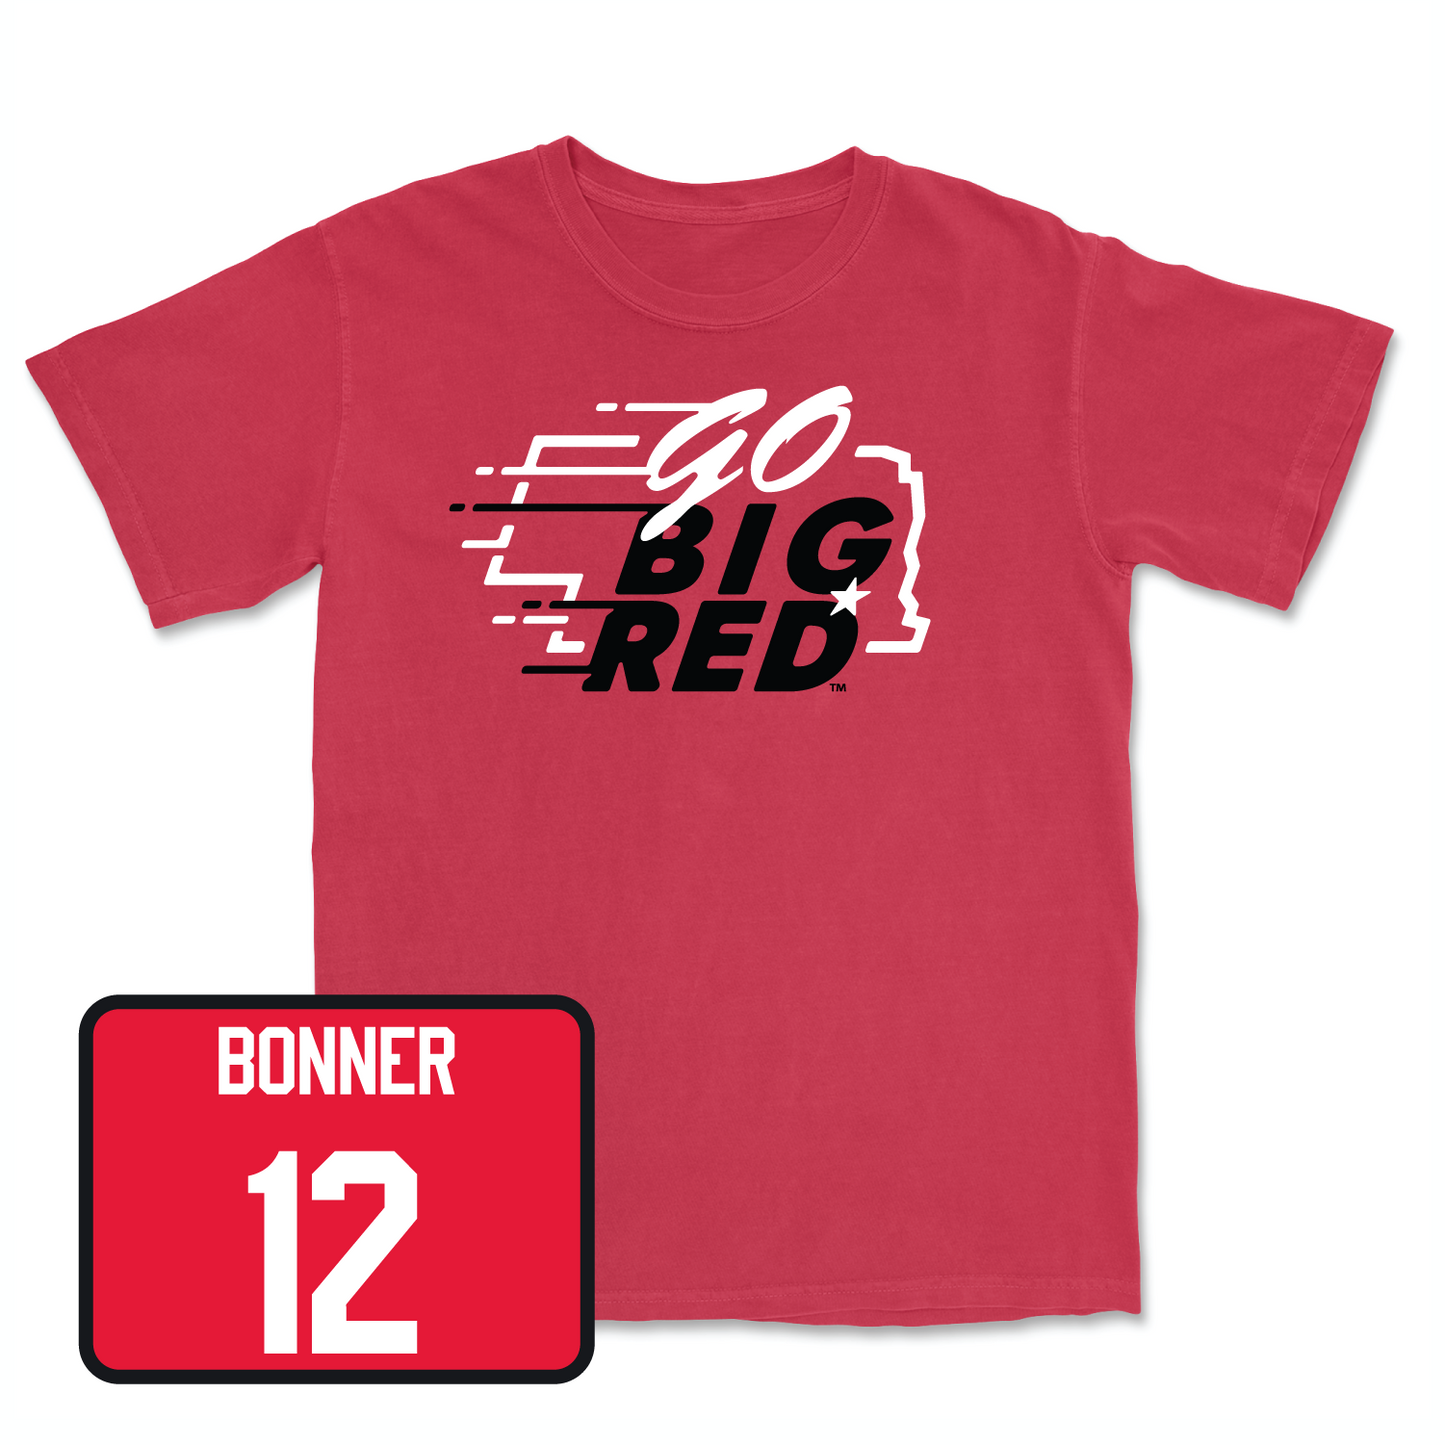 Red Football GBR Tee 2 Small / Janiran Bonner | #12